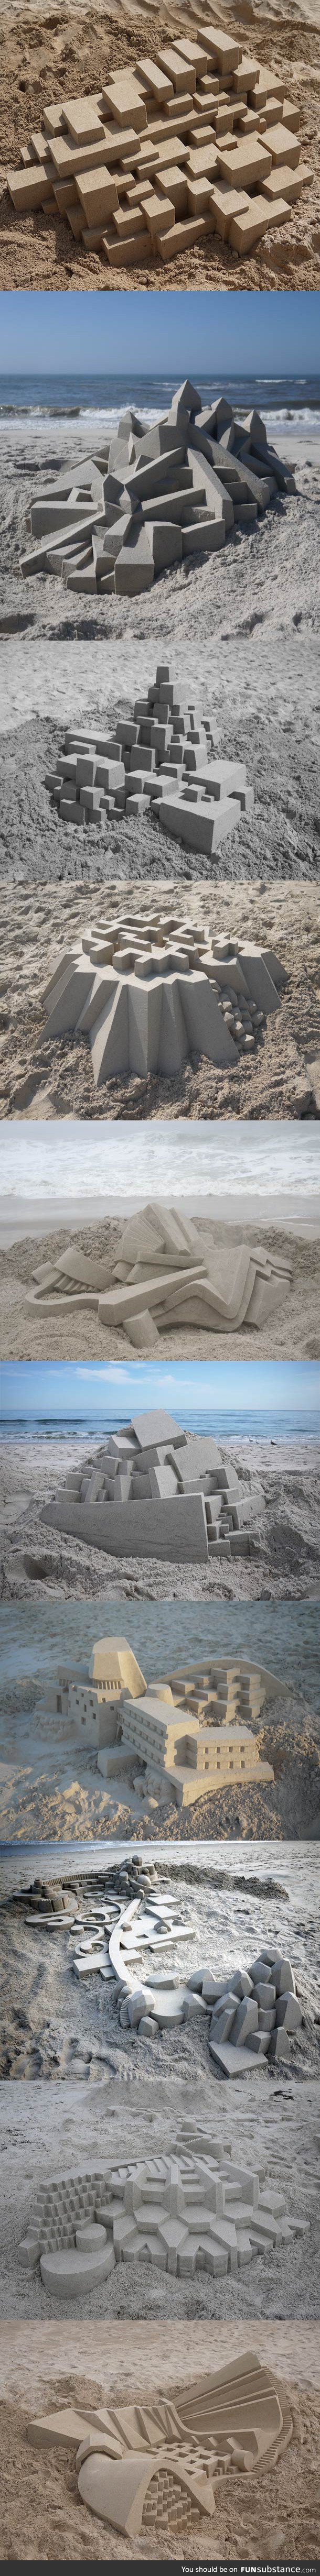 Geometric Sand Castles by Calvin Seibert.